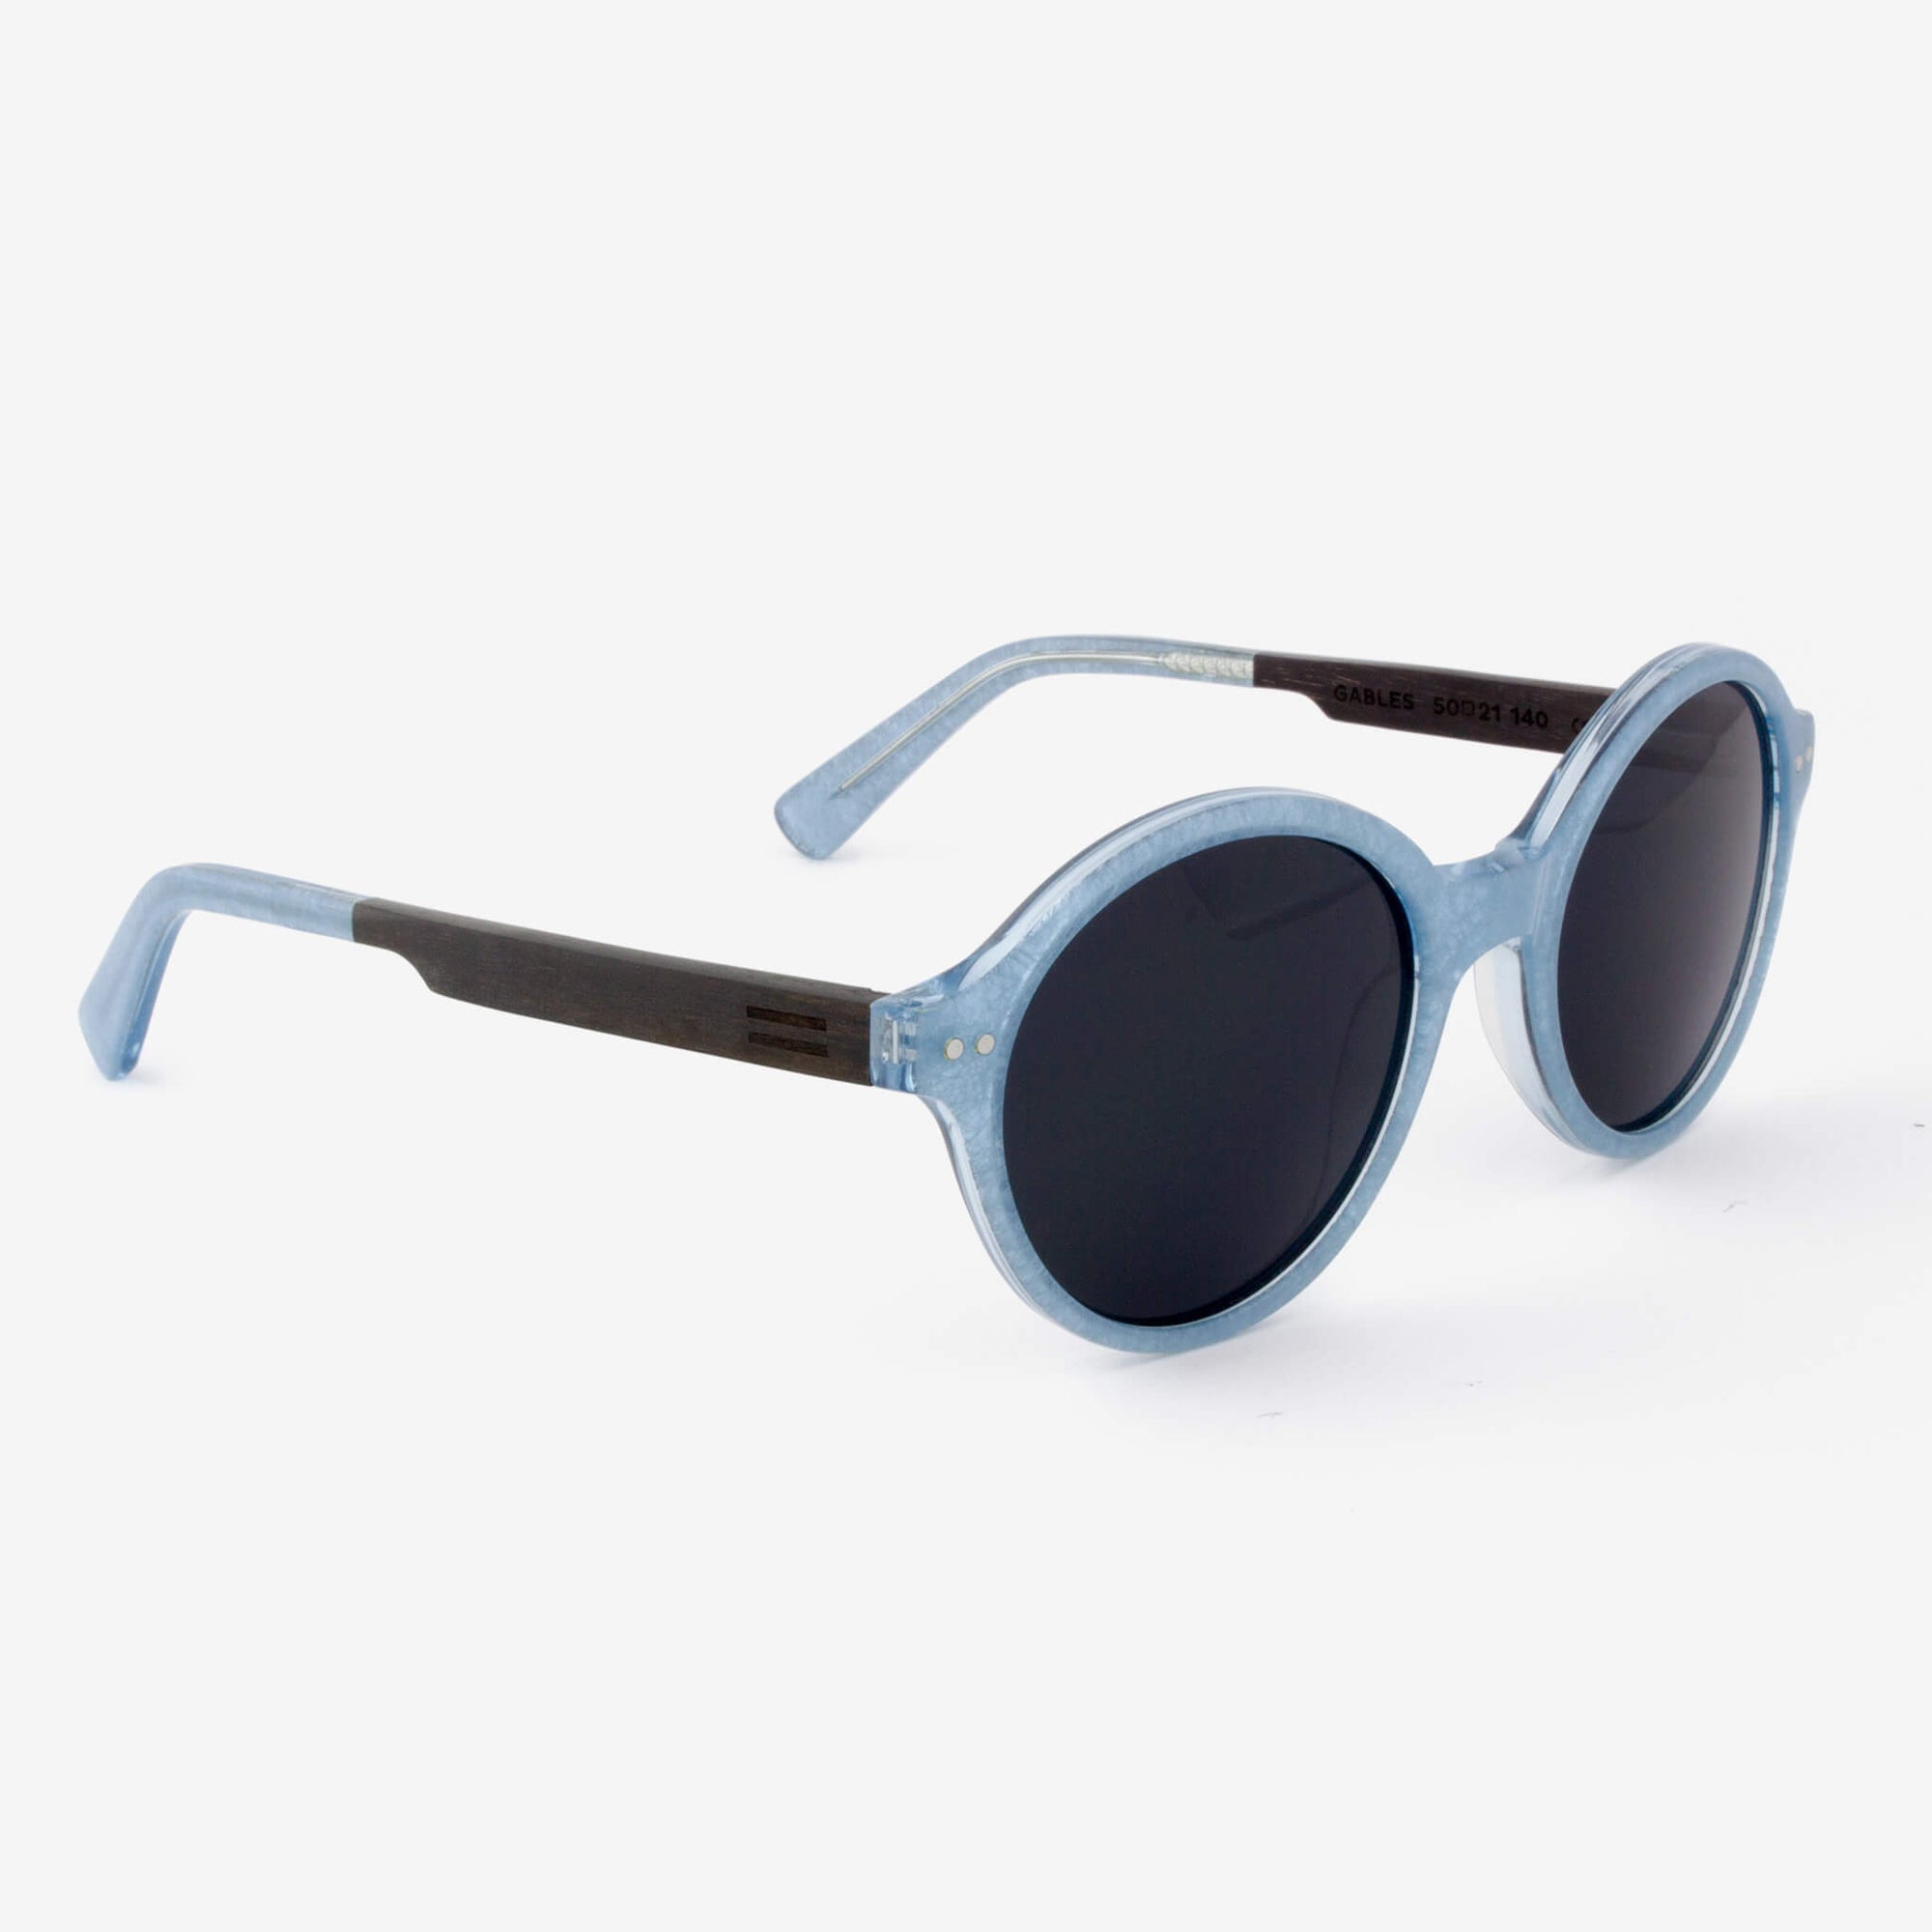 Gables light blue metallic fiber acetate and wood sunglasses with ebony wood temples